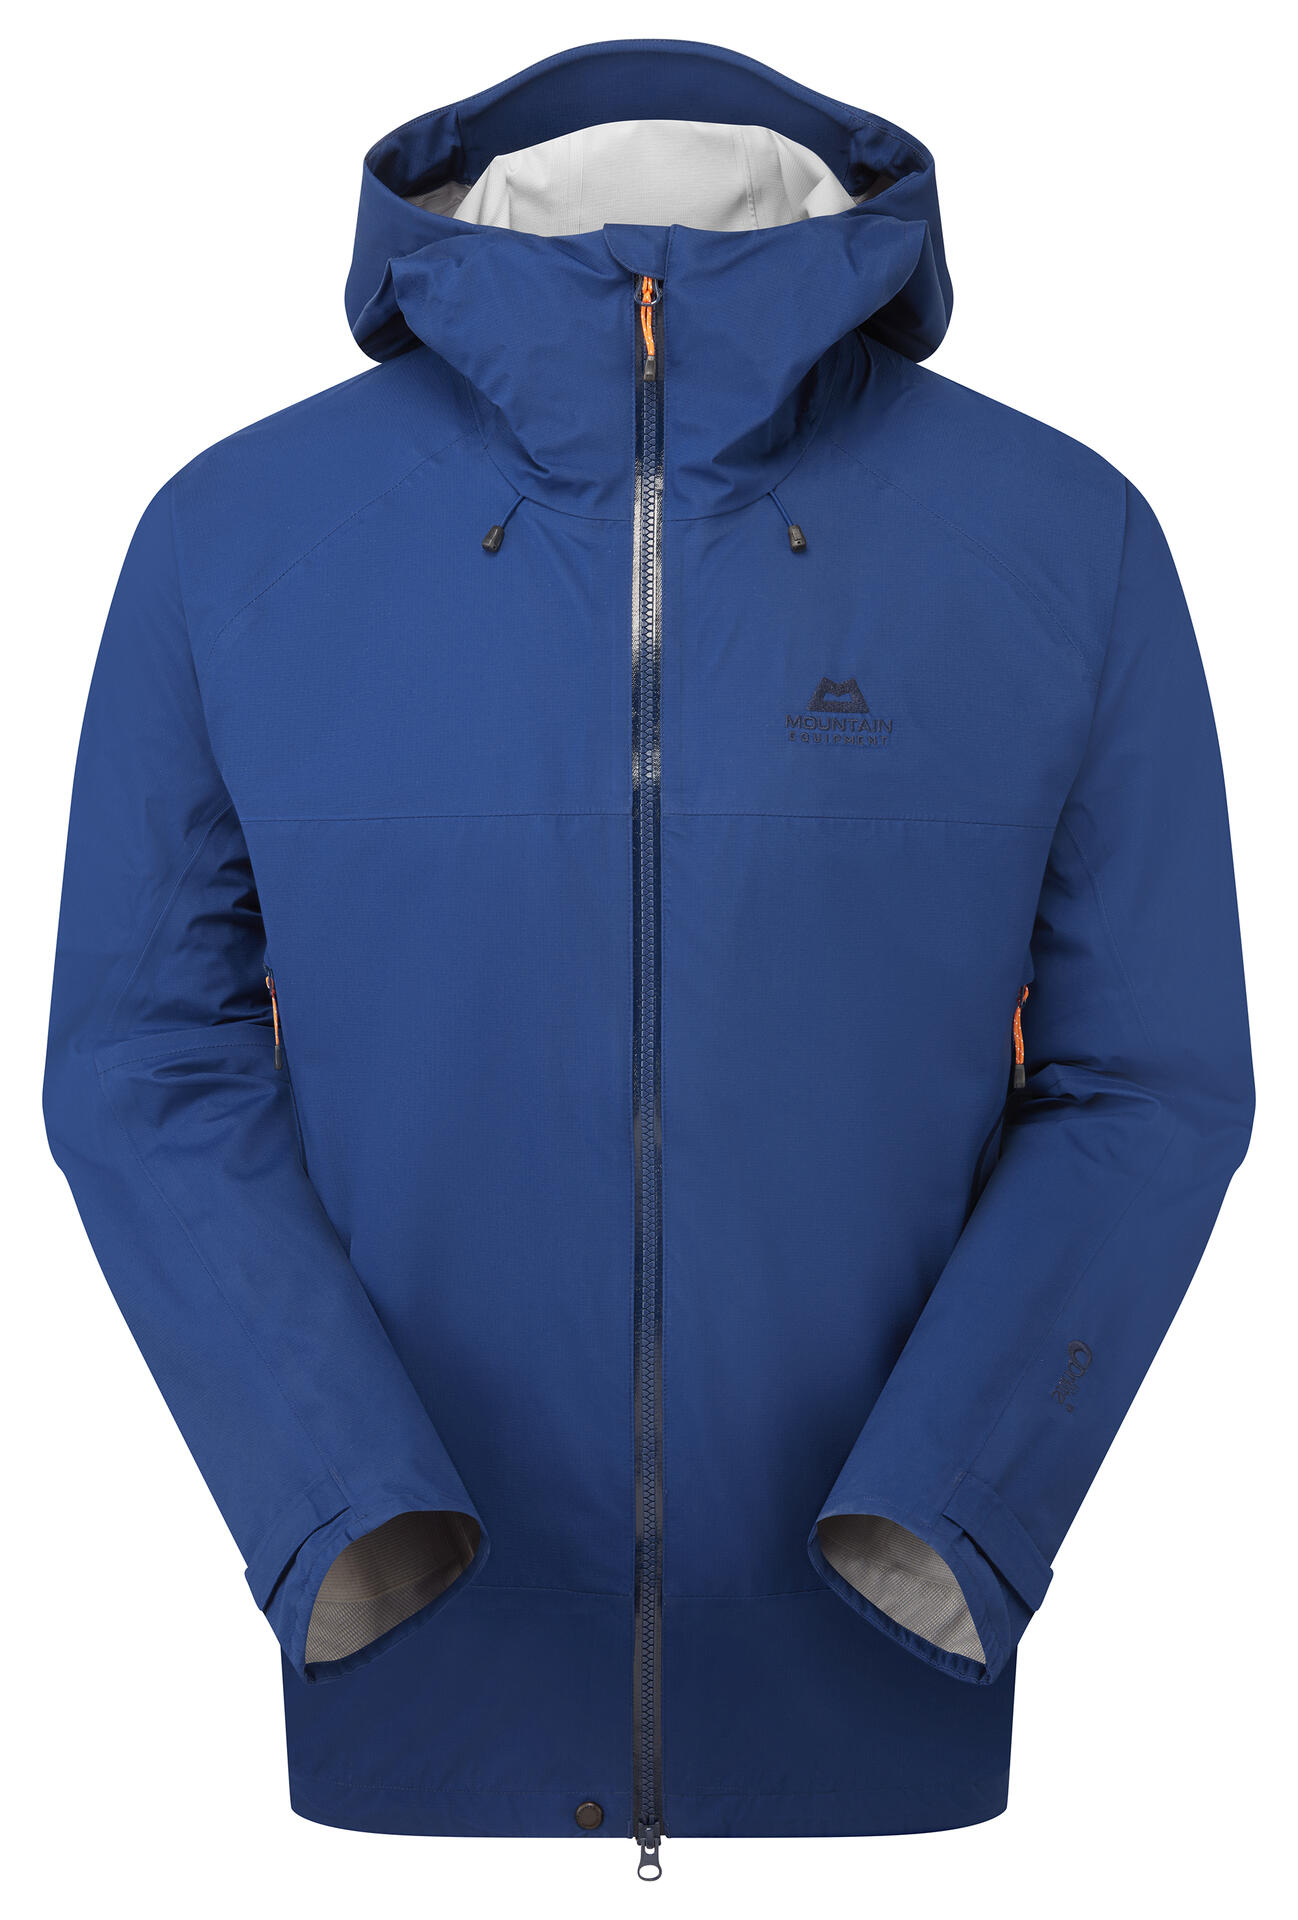 Mountain Equipment Odyssey Jacket Men'S Barva: admiral blue, Velikost: L